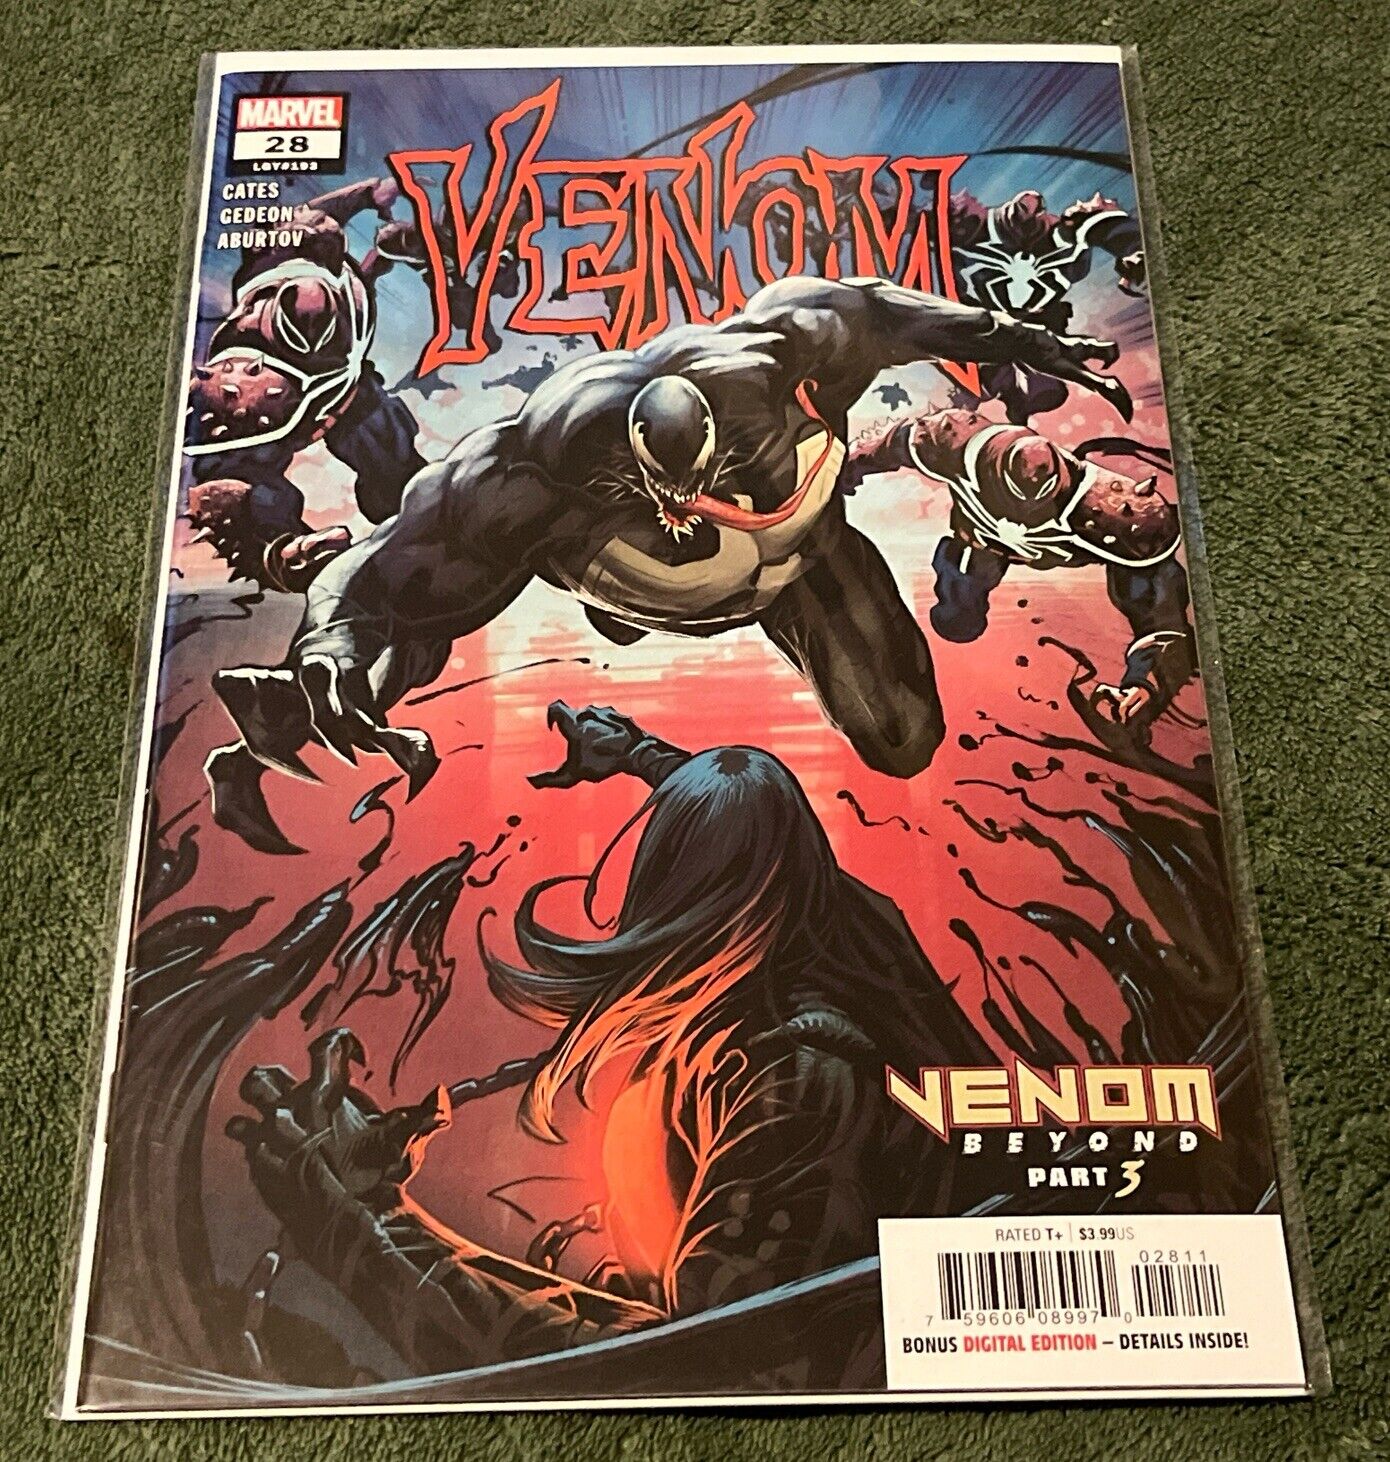 2020 Marvel Comics Venom #28 Legacy #193 - Venom Beyond Part 3